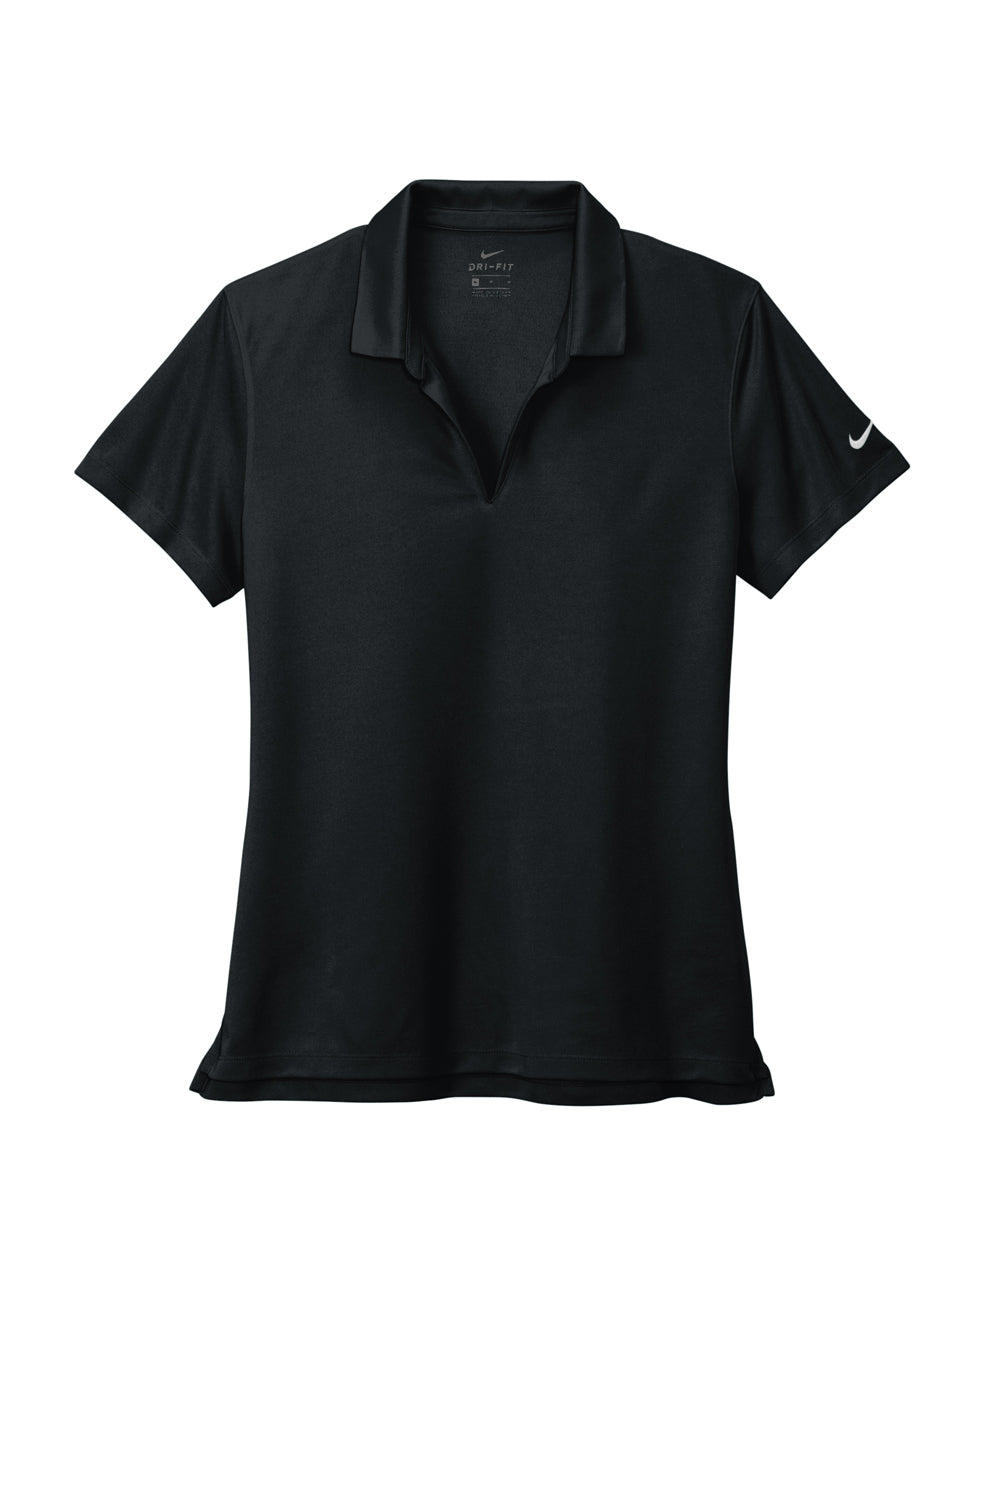 Nike NKDC1991 Womens Dri-Fit Moisture Wicking Micro Pique 2.0 Short Sleeve Polo Shirt Black Flat Front